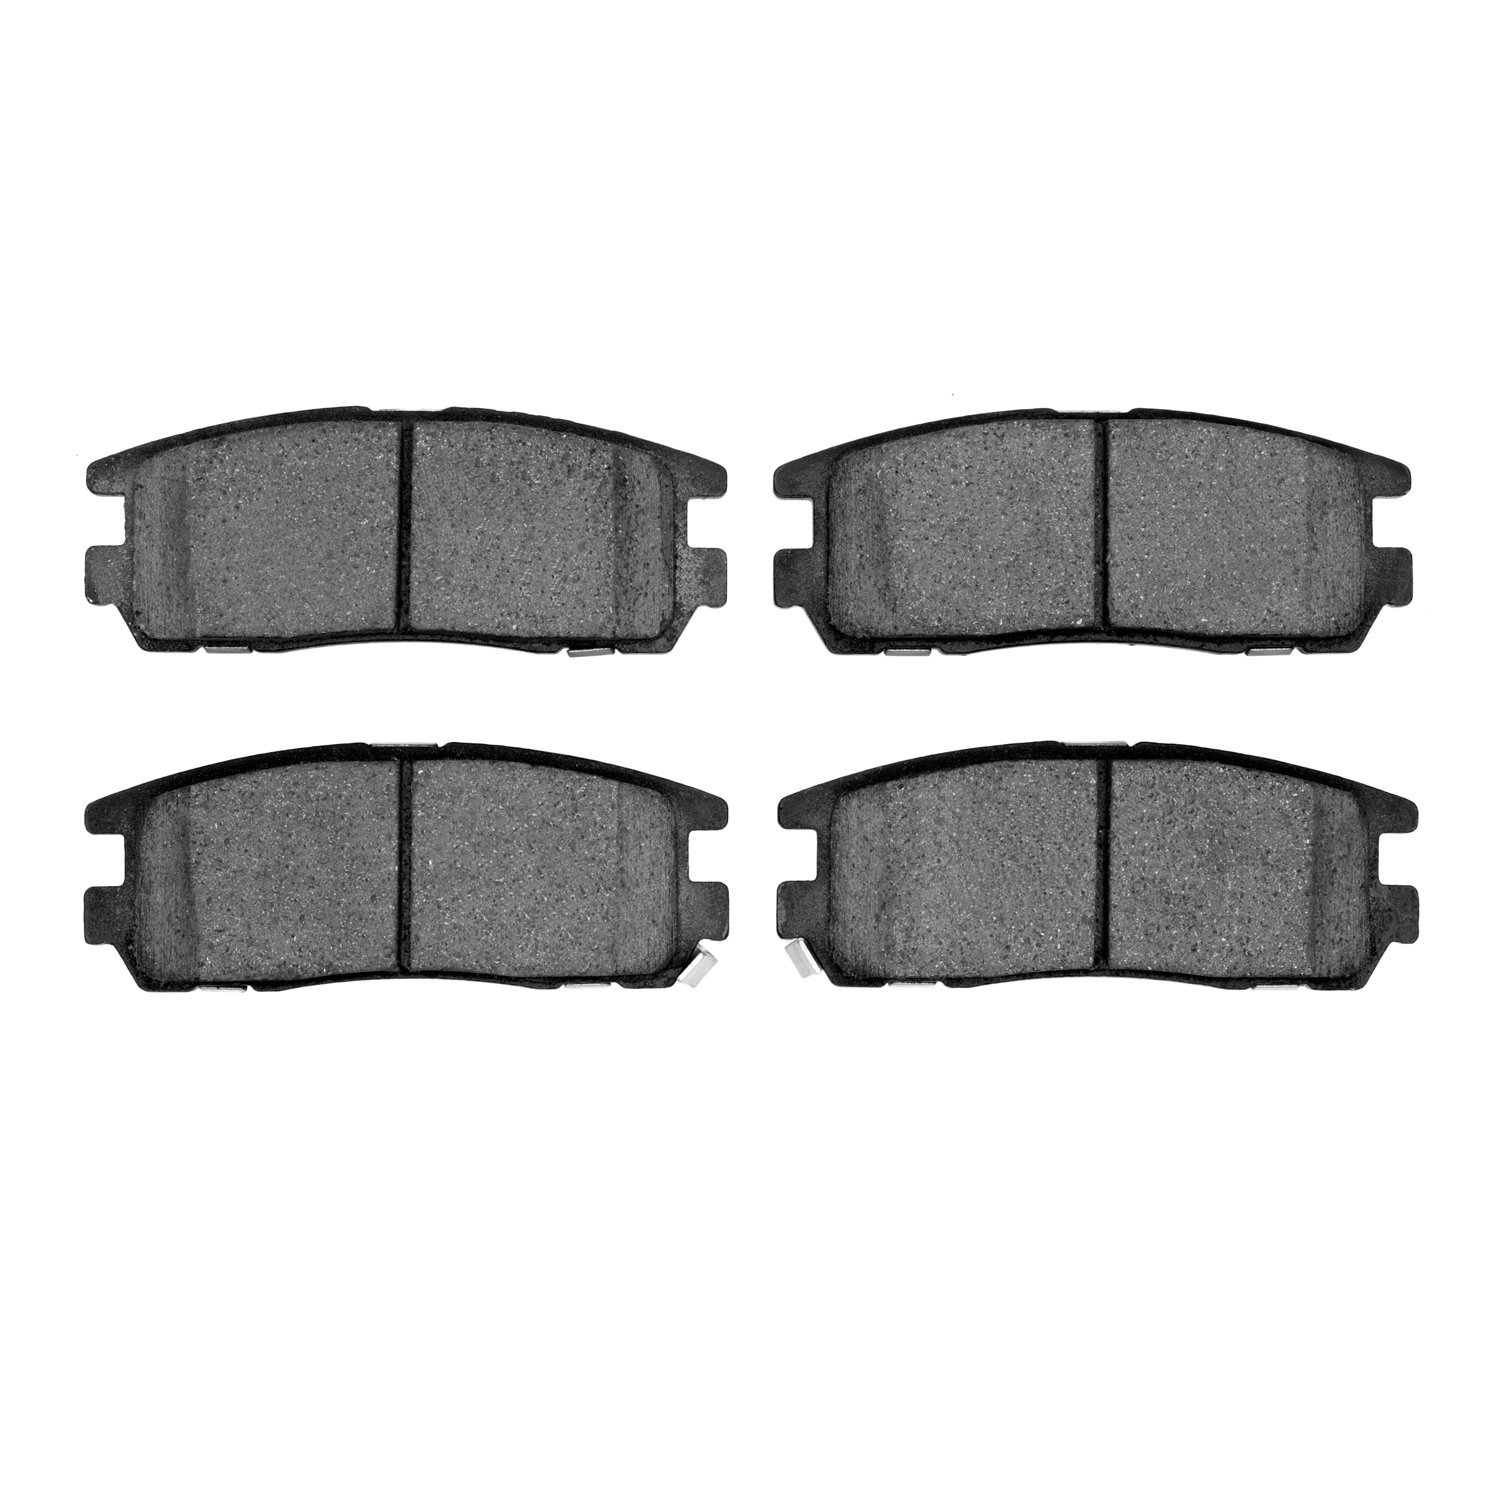 1310-0580-00 3000-Series Ceramic Brake Pads, 1992-2004 Multiple Makes/Models, Position: Rear